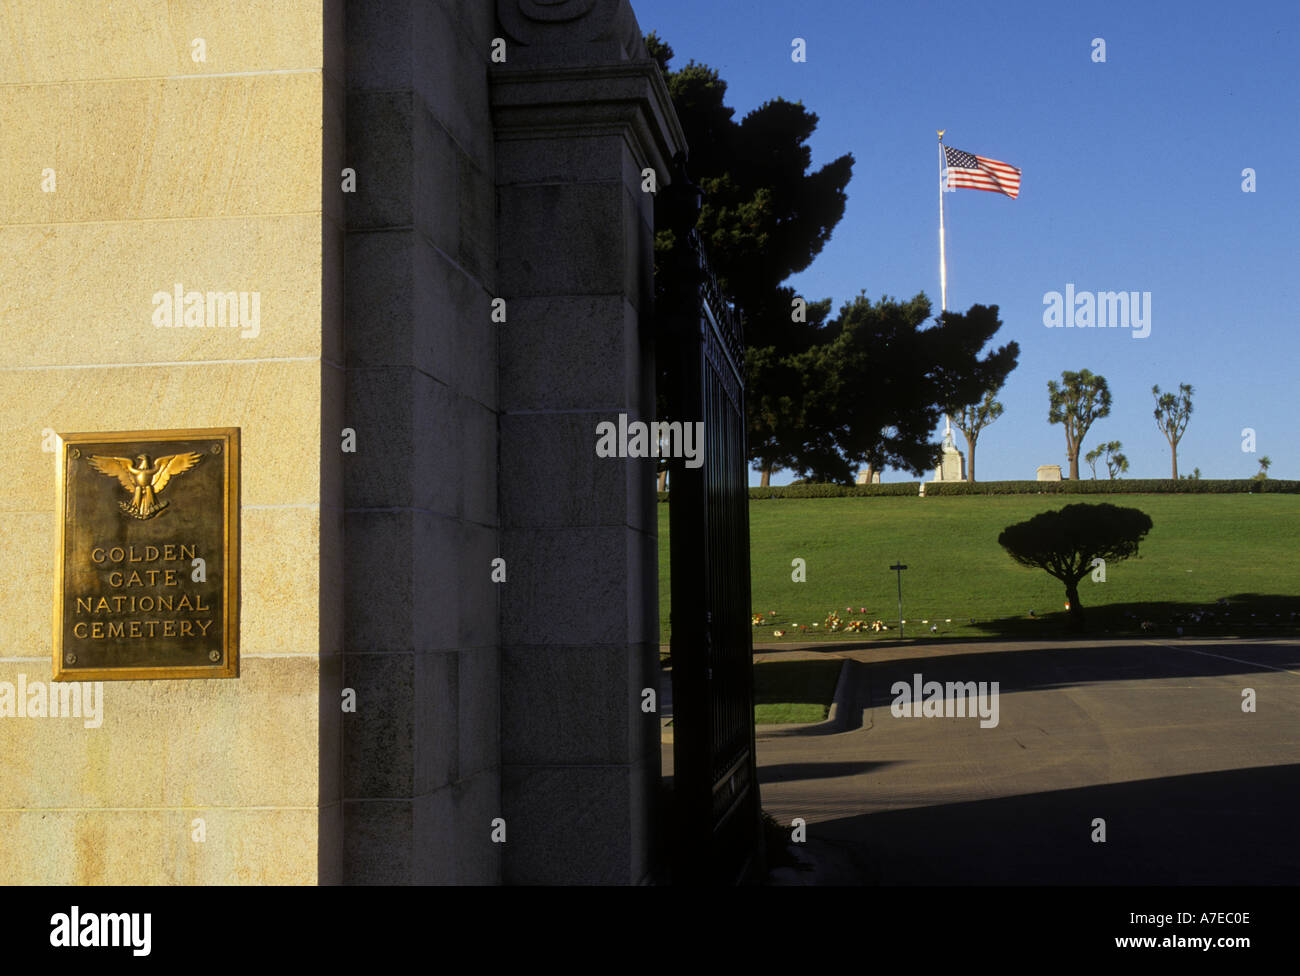 California San Bruno Golden Gate National Cemetery entrance gate United States flag on pole Stock Photo